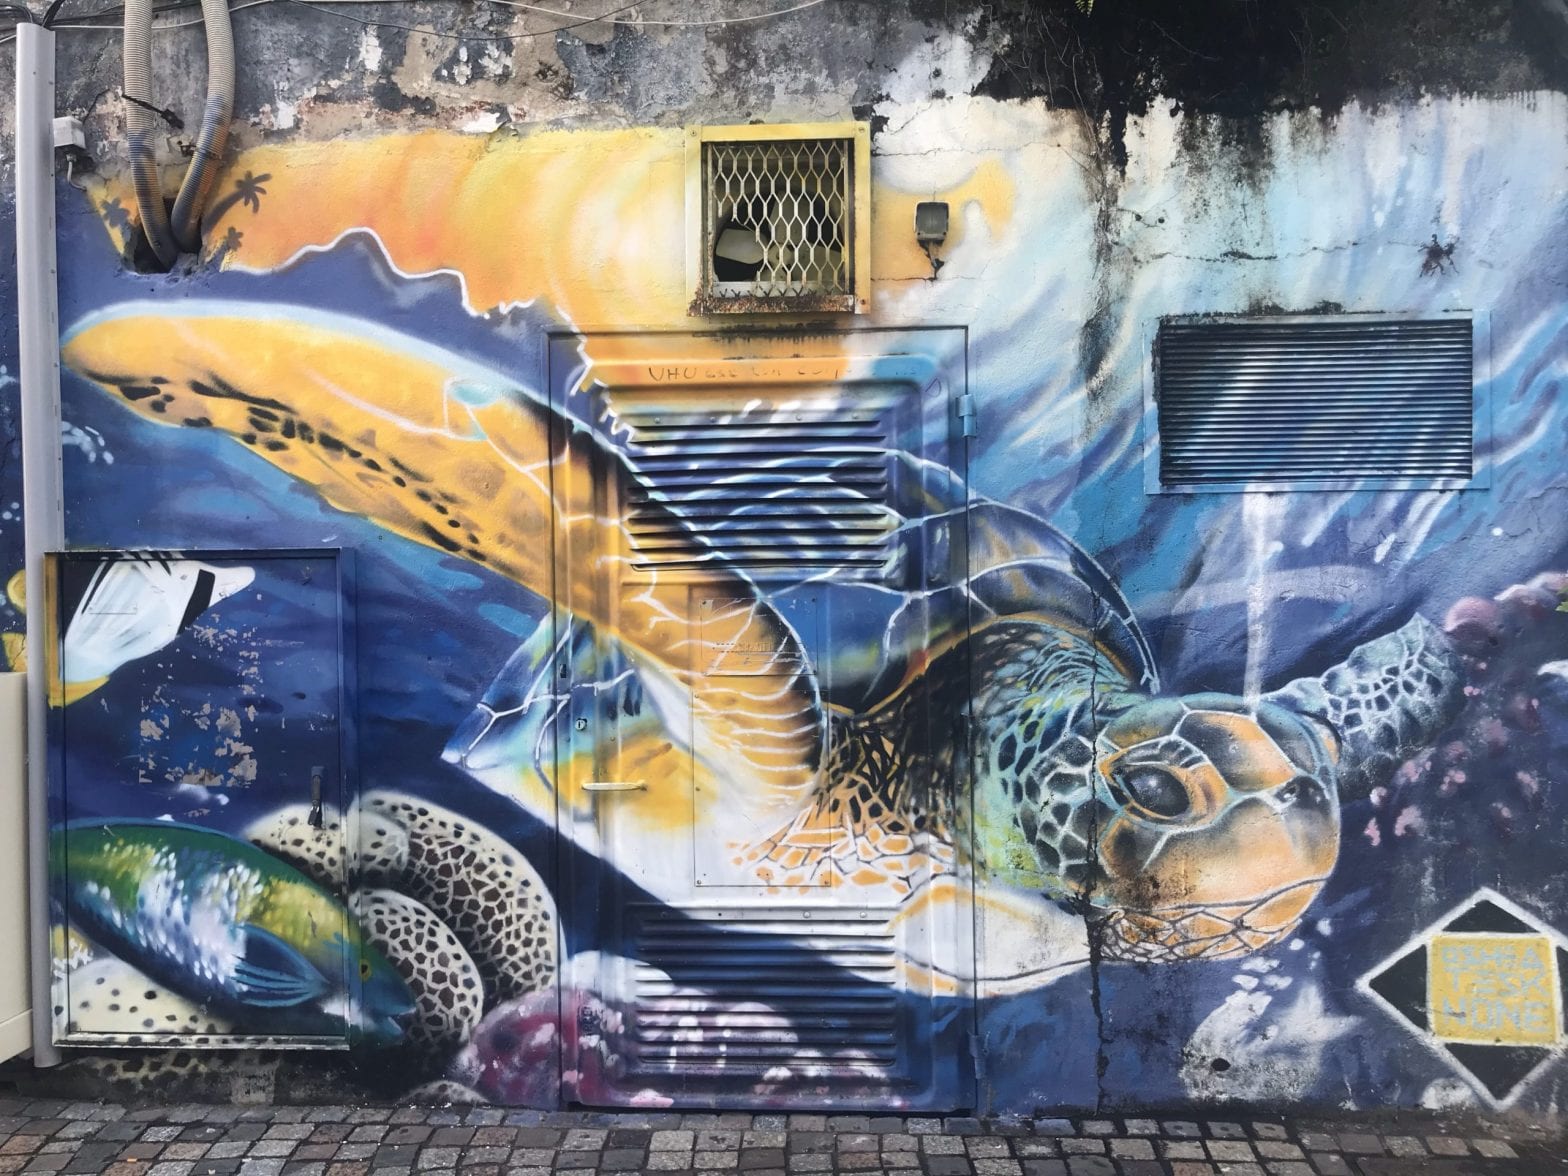 Sea turtle street art in Fort-de-France, Martinique